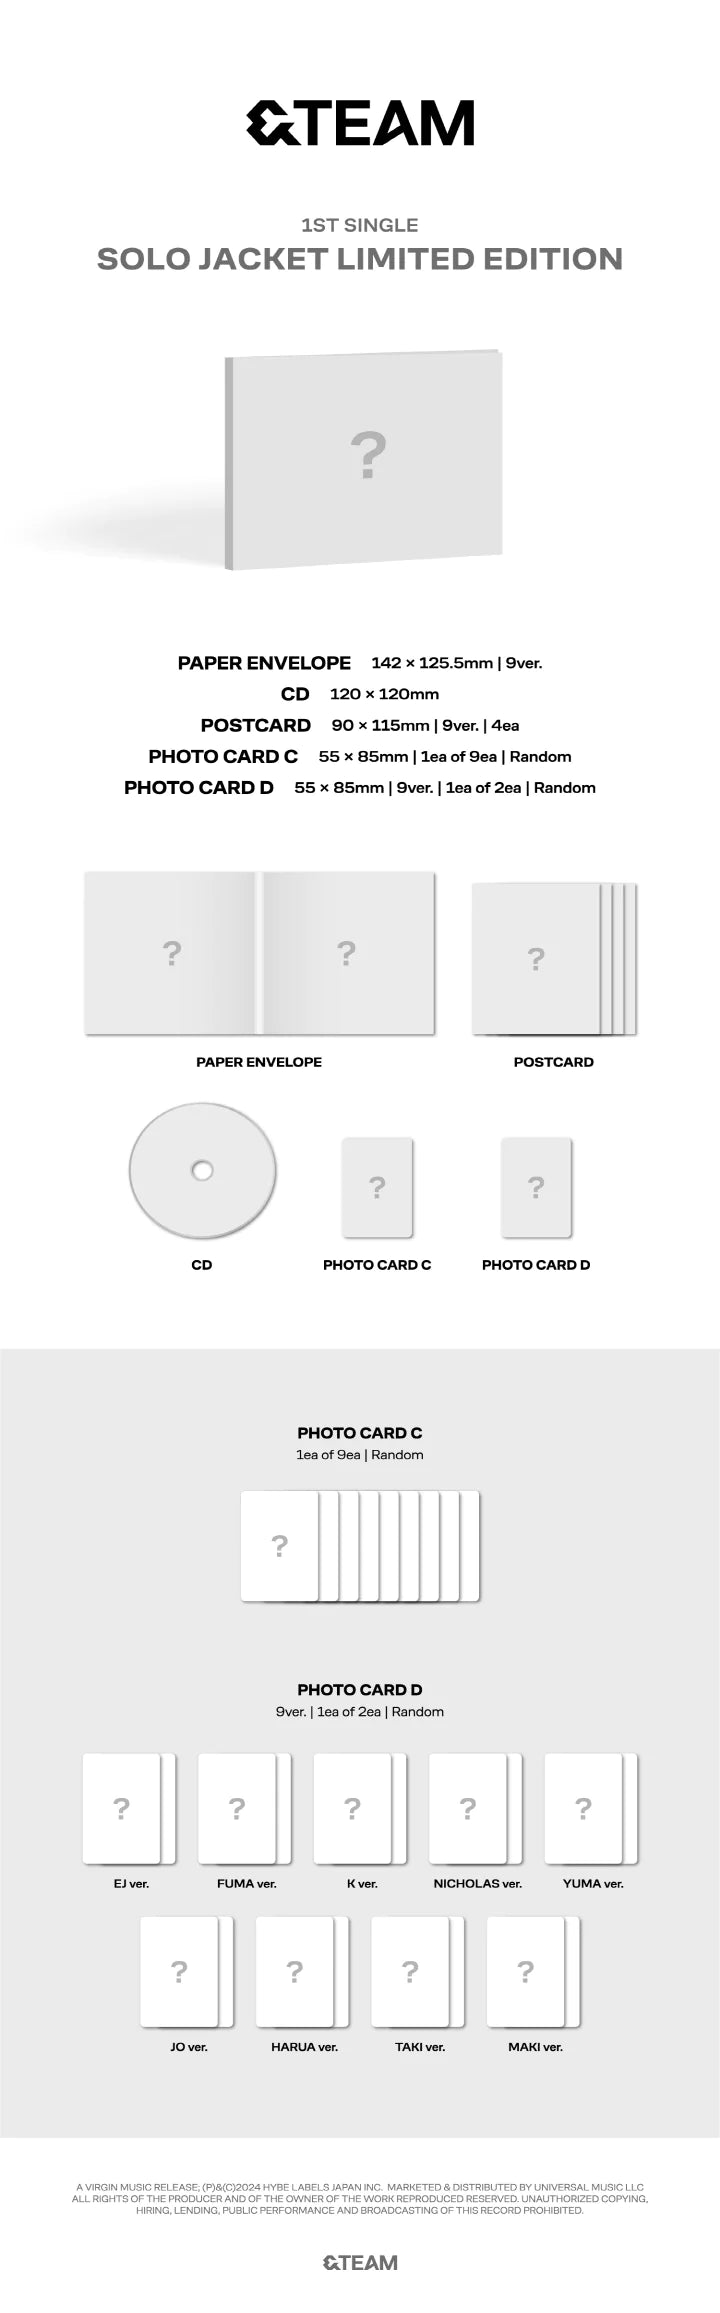 &TEAM - 1st Single Album (Solo Edition) Infographic